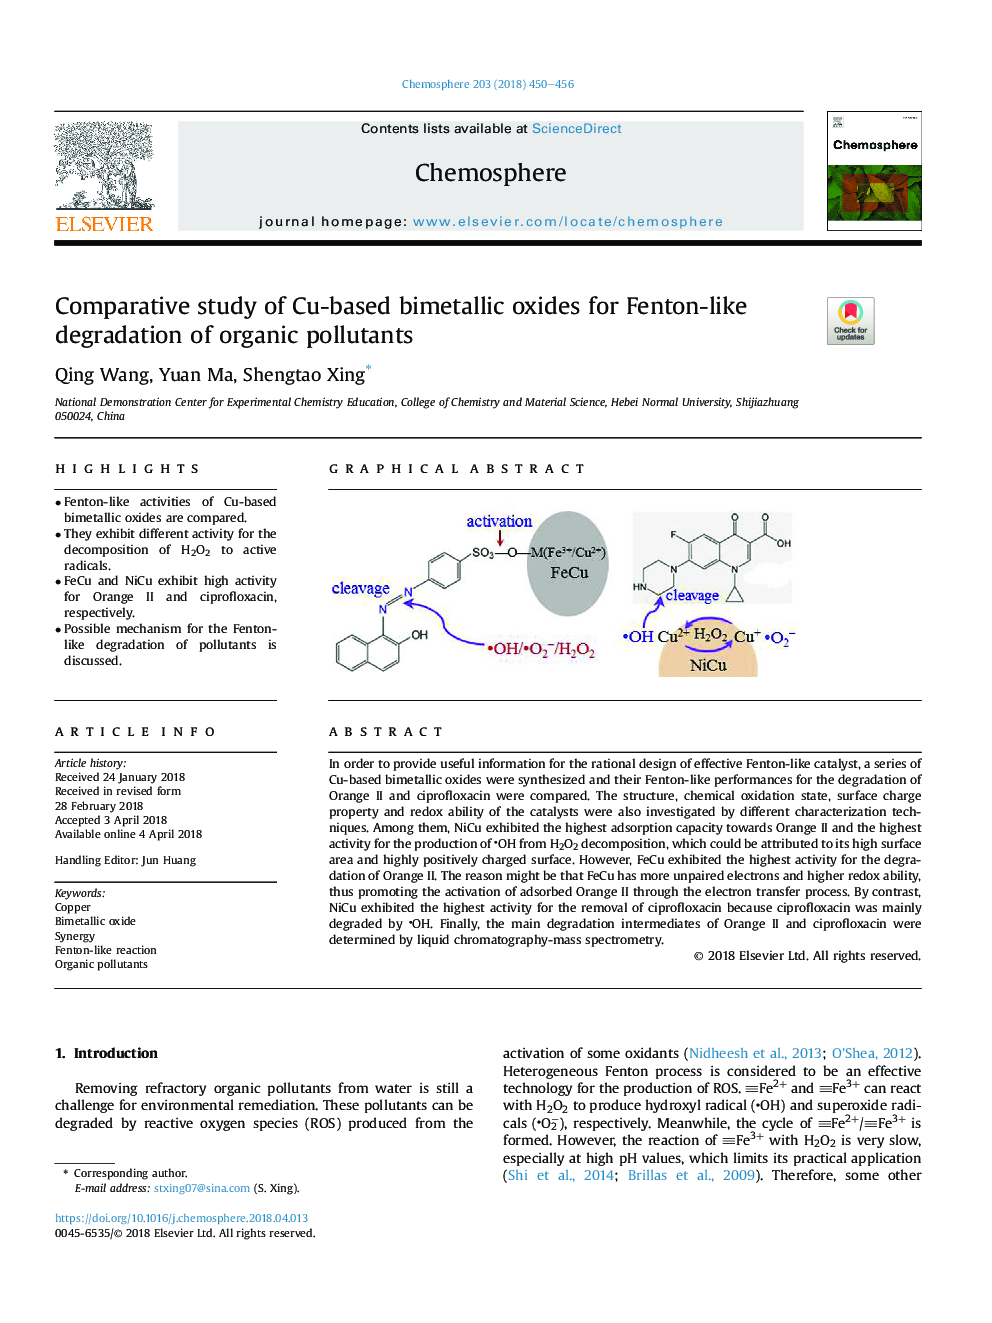 Comparative study of Cu-based bimetallic oxides for Fenton-like degradation of organic pollutants